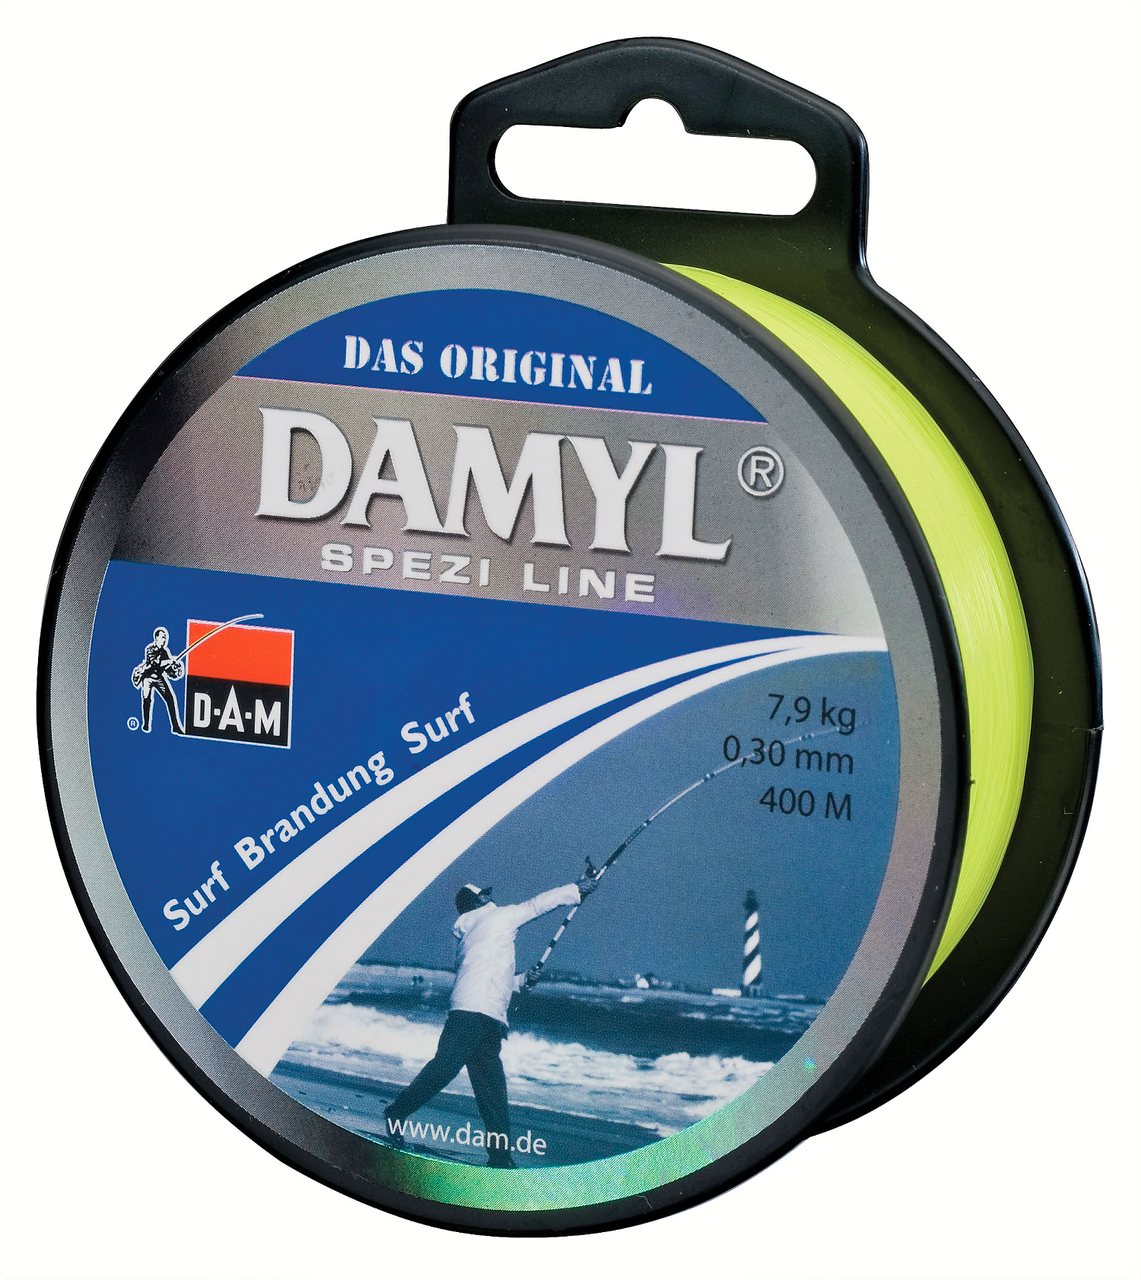 DAM DAMYL SPEZI LINE SURF 0.40mm (250m spool) Quality Monofilament